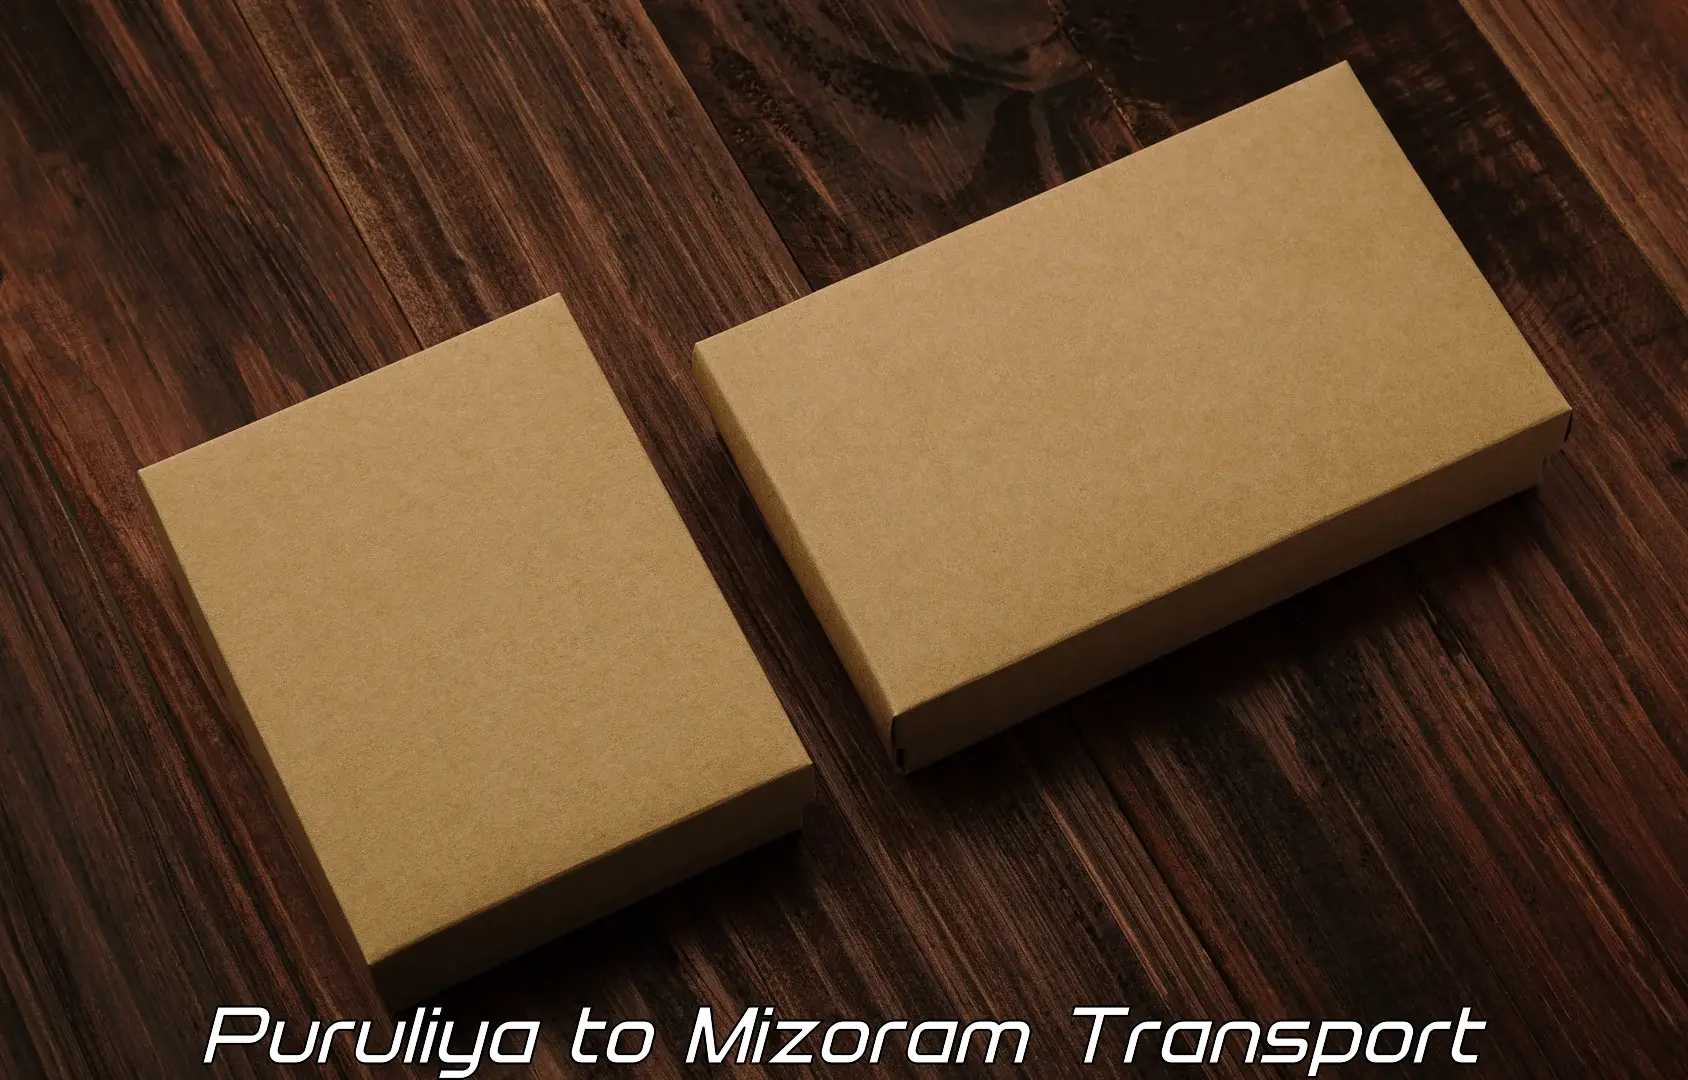 Transport in sharing Puruliya to Mizoram